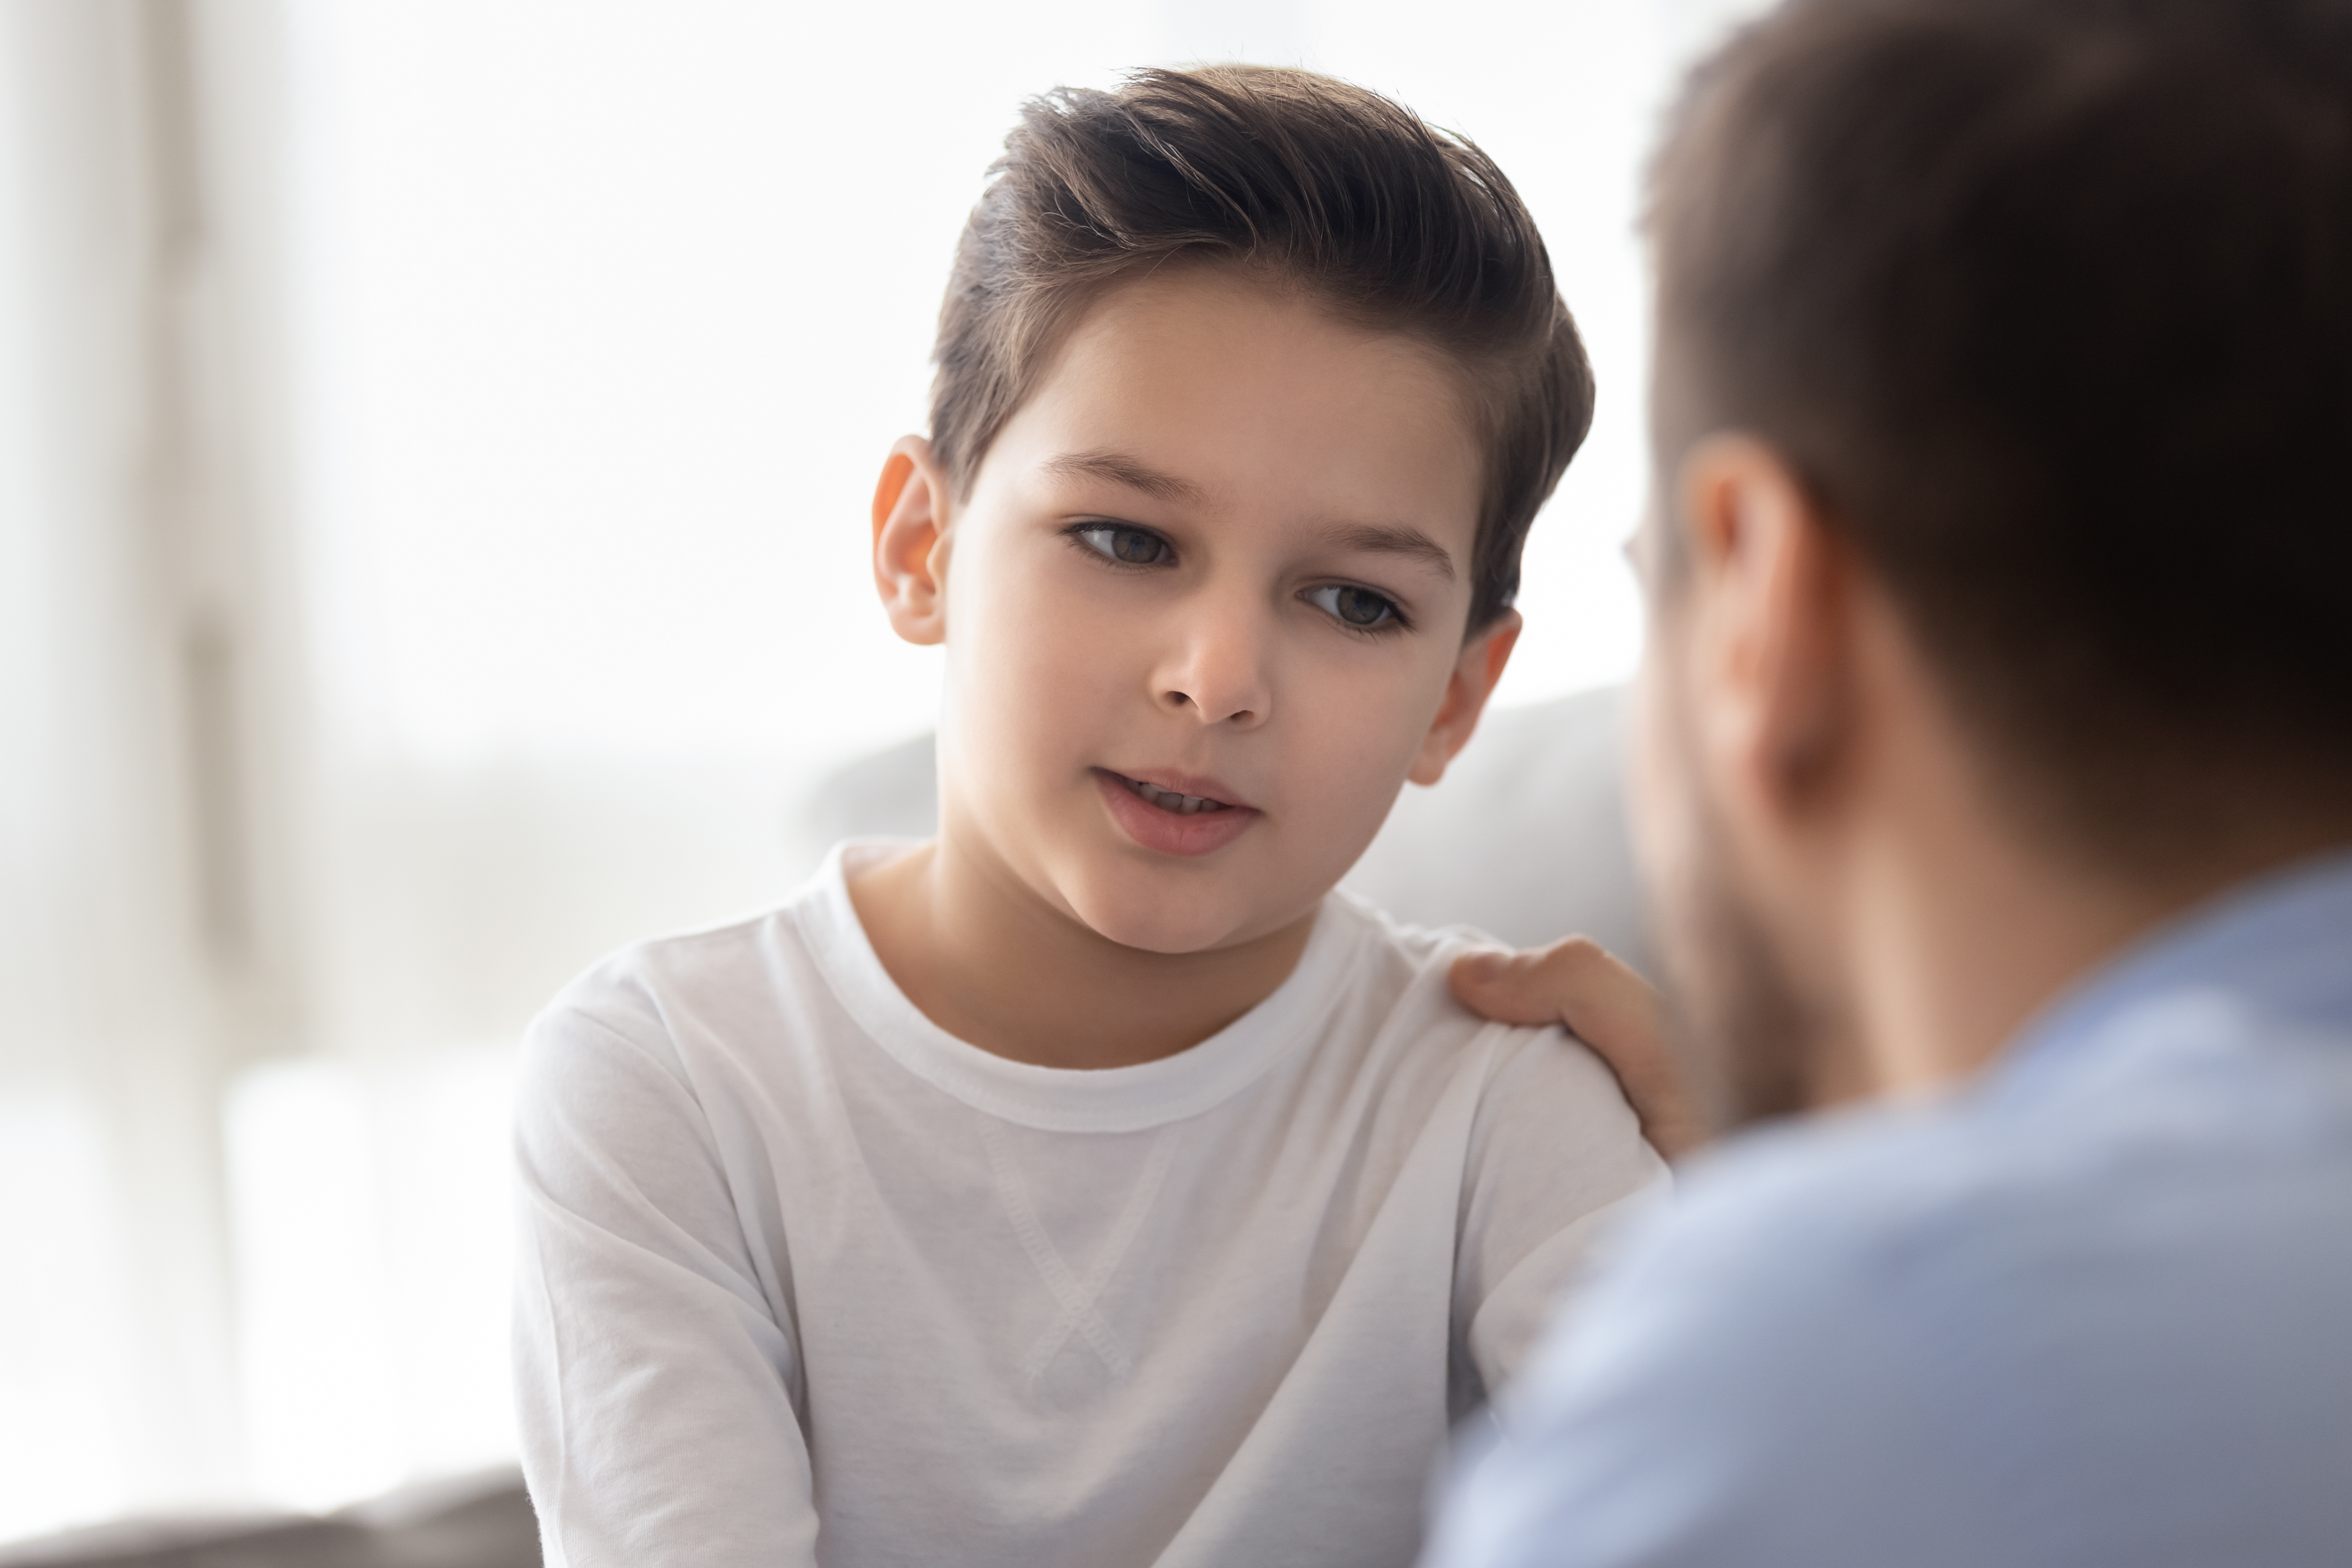 A man talking to a boy | Source: Shutterstock